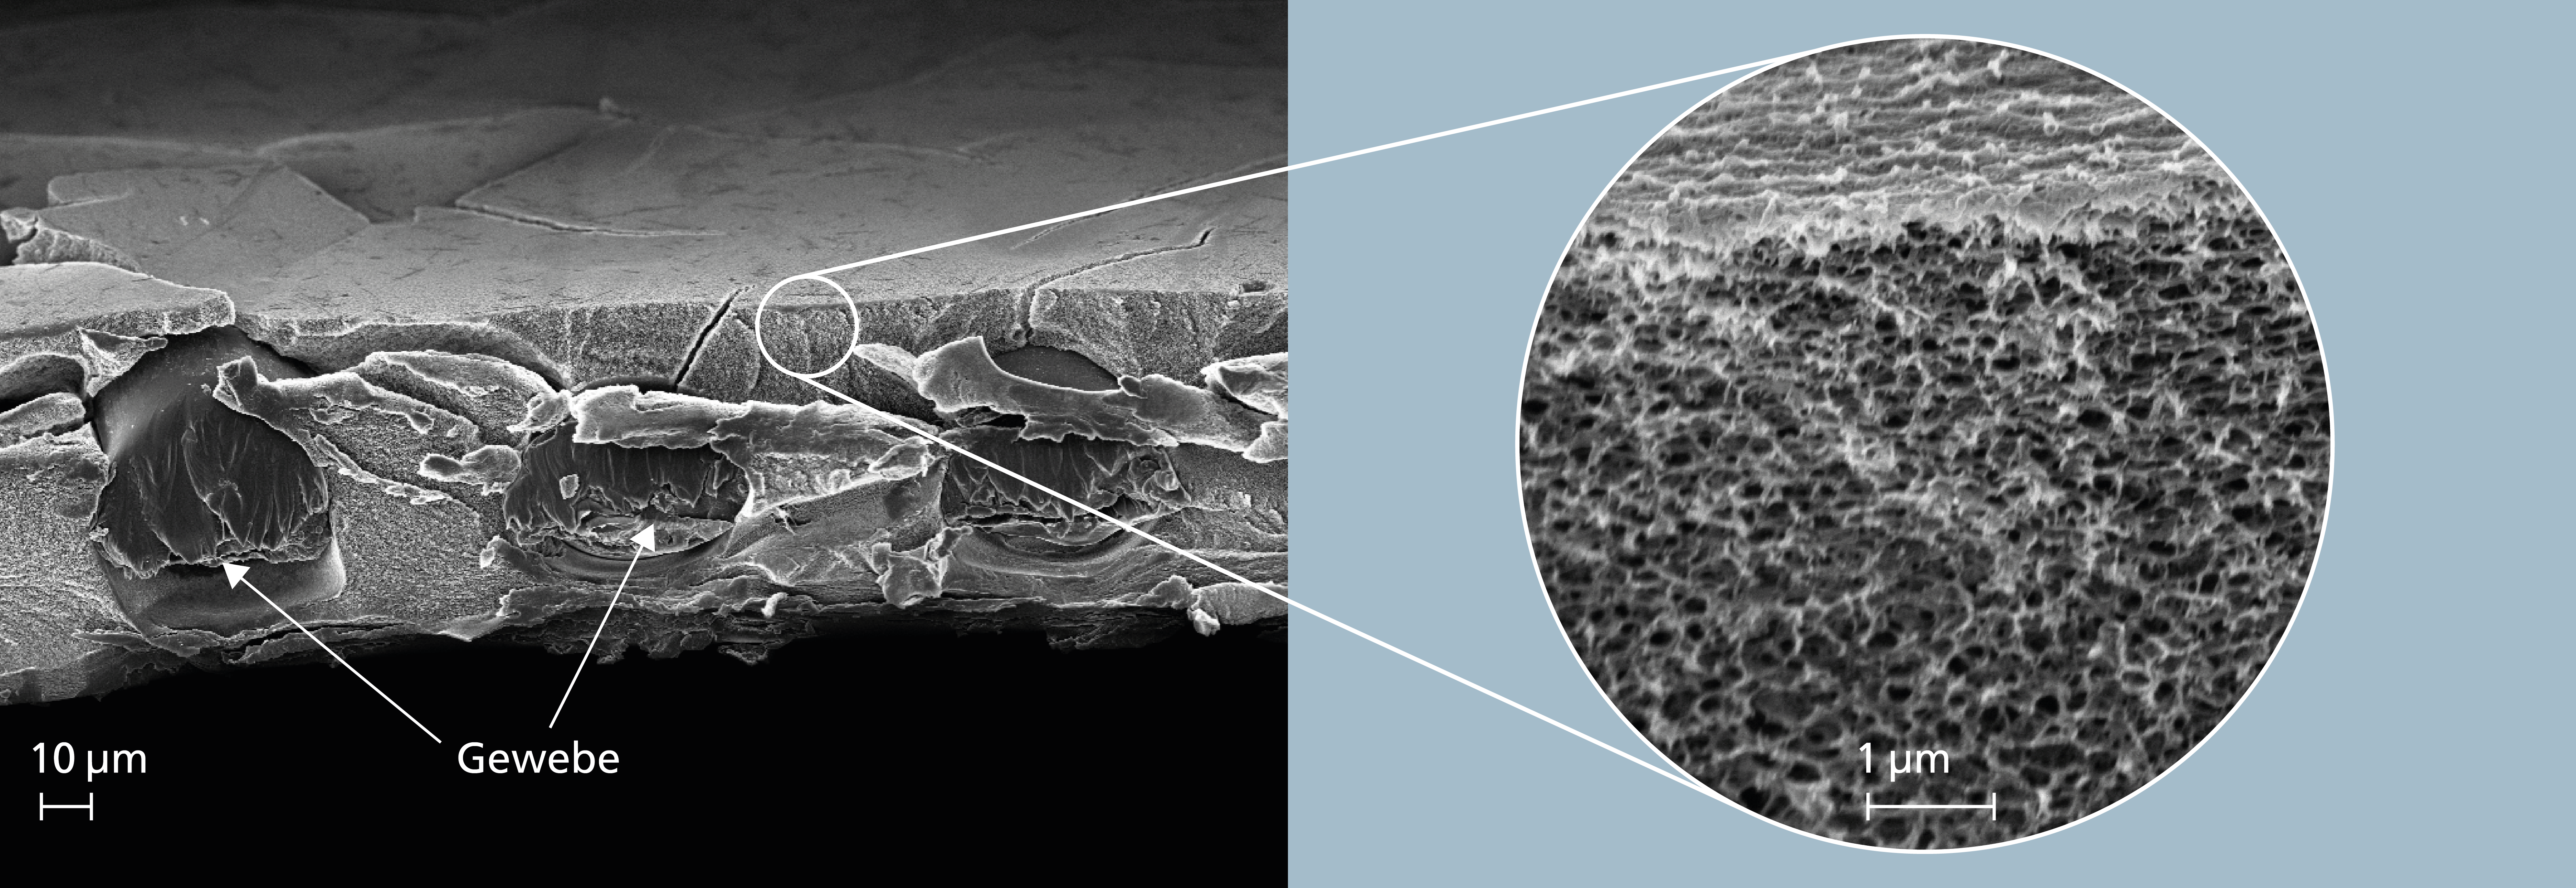 Cellulose acetate membrane under the electron microscope.